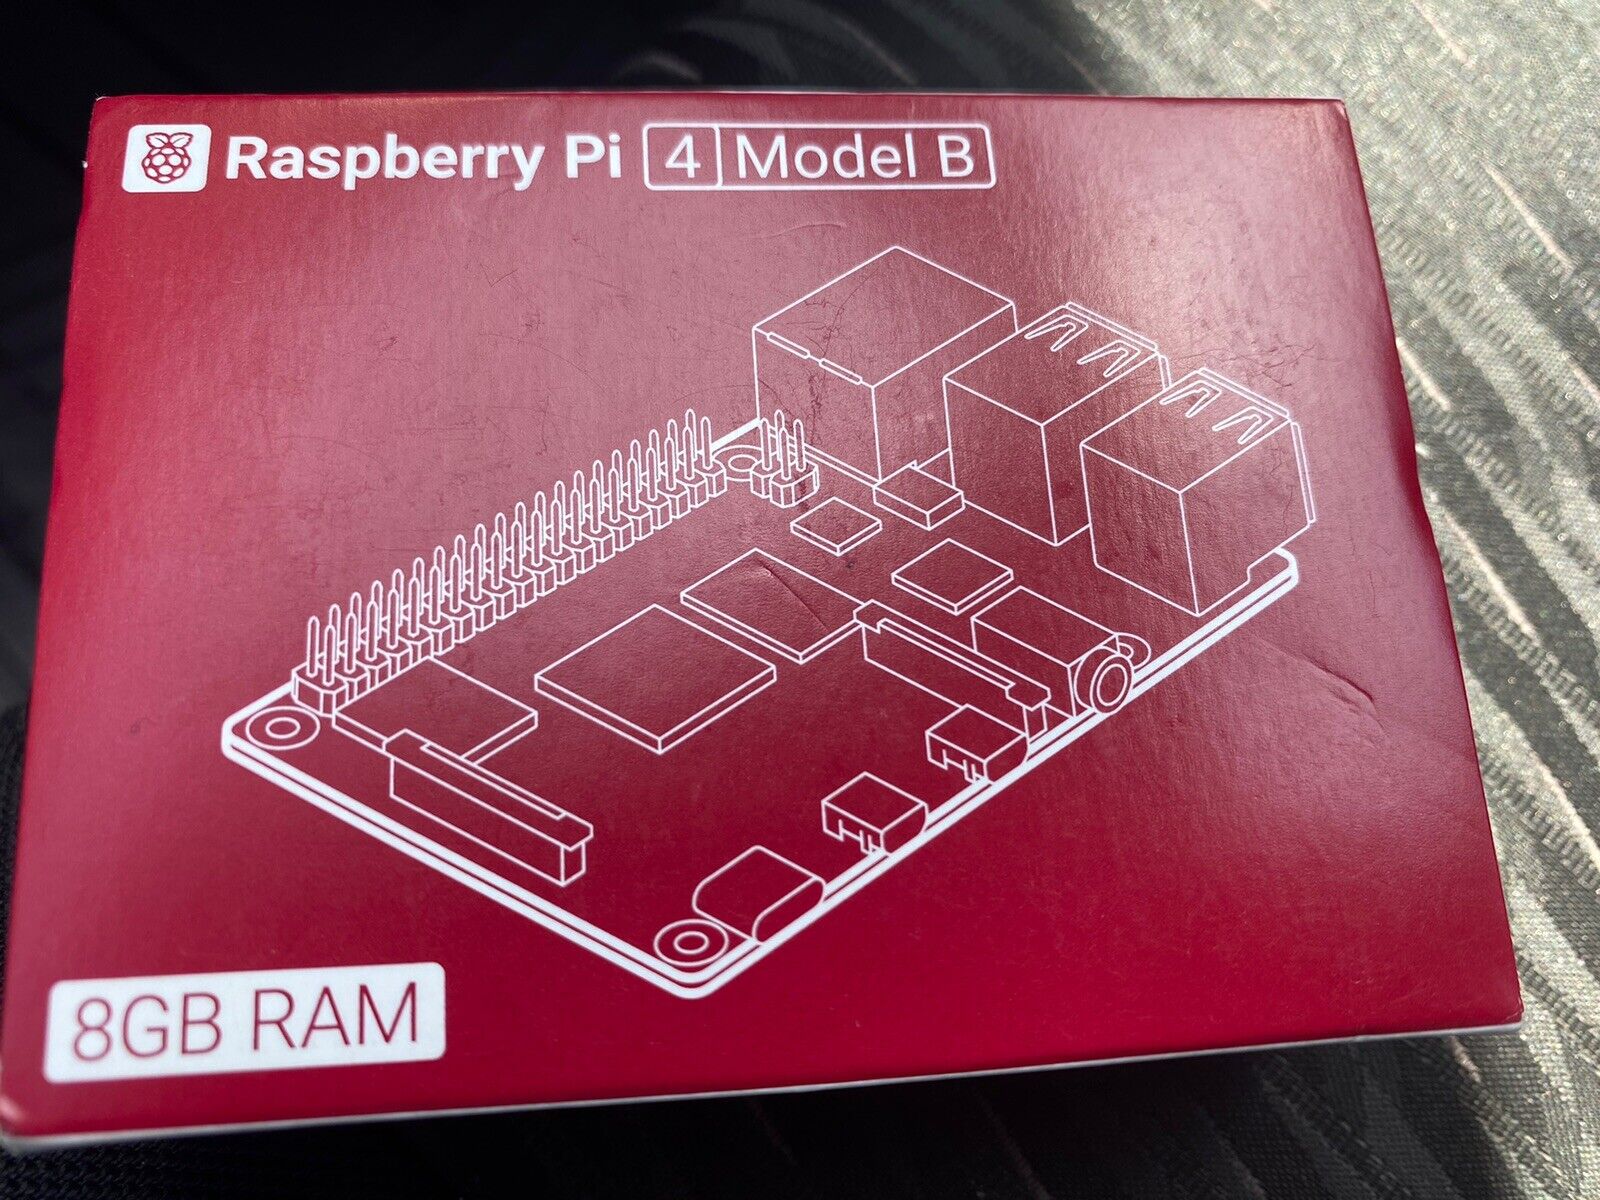 Brand New & Factory Sealed Raspberry Pi 4 Computer Model B 8GB Ram. Ship Free